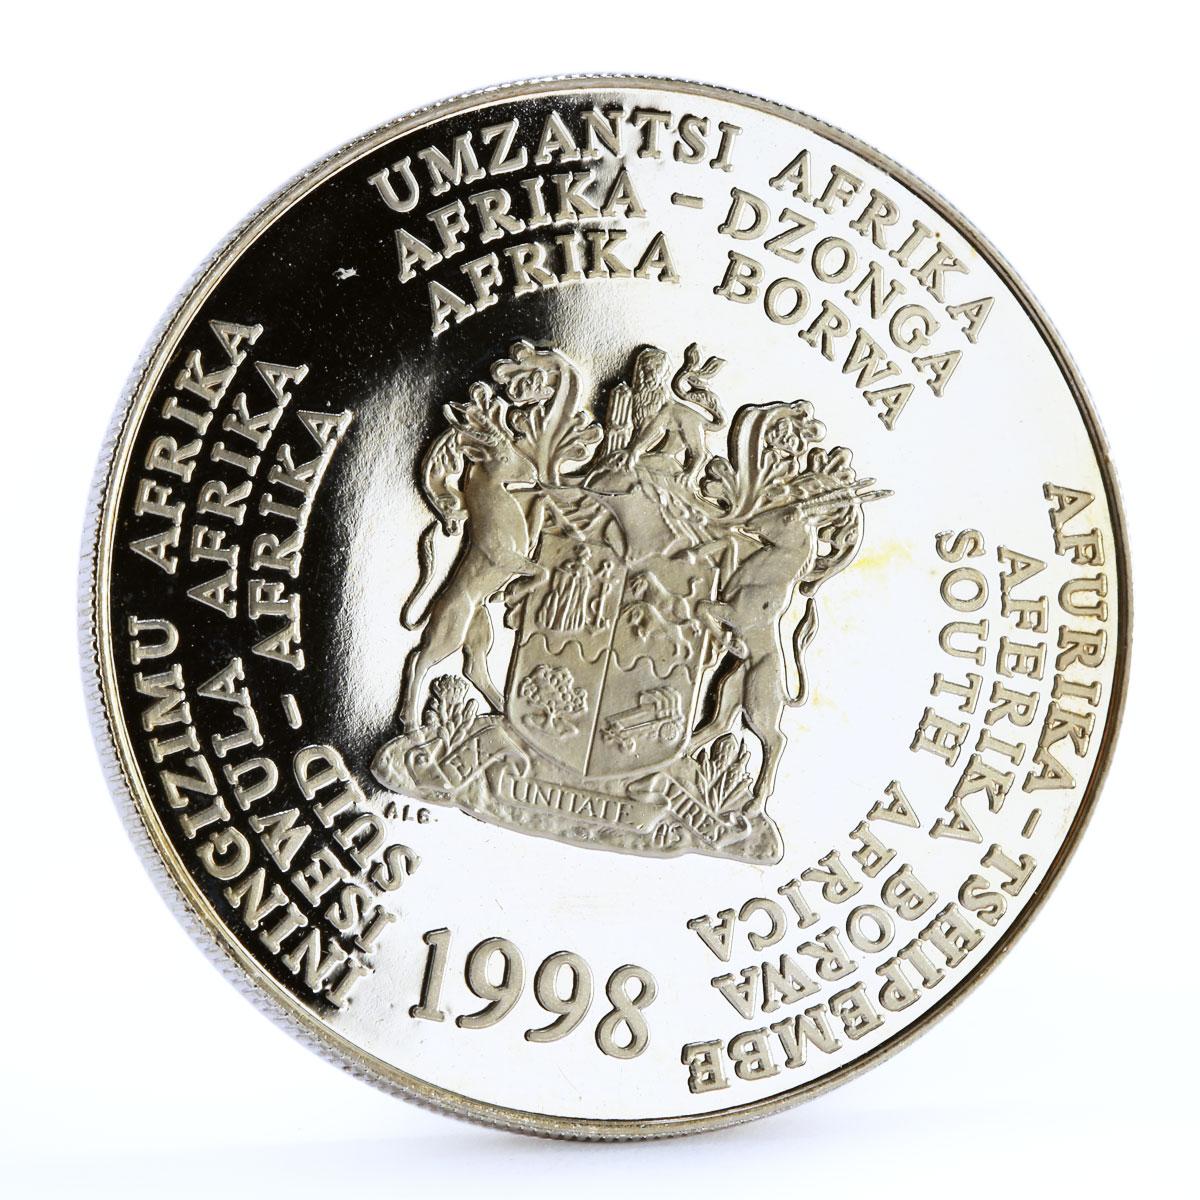 South Africa 2 rand Endangered Widlife Jackass Penguin Fauna silver coin 1998